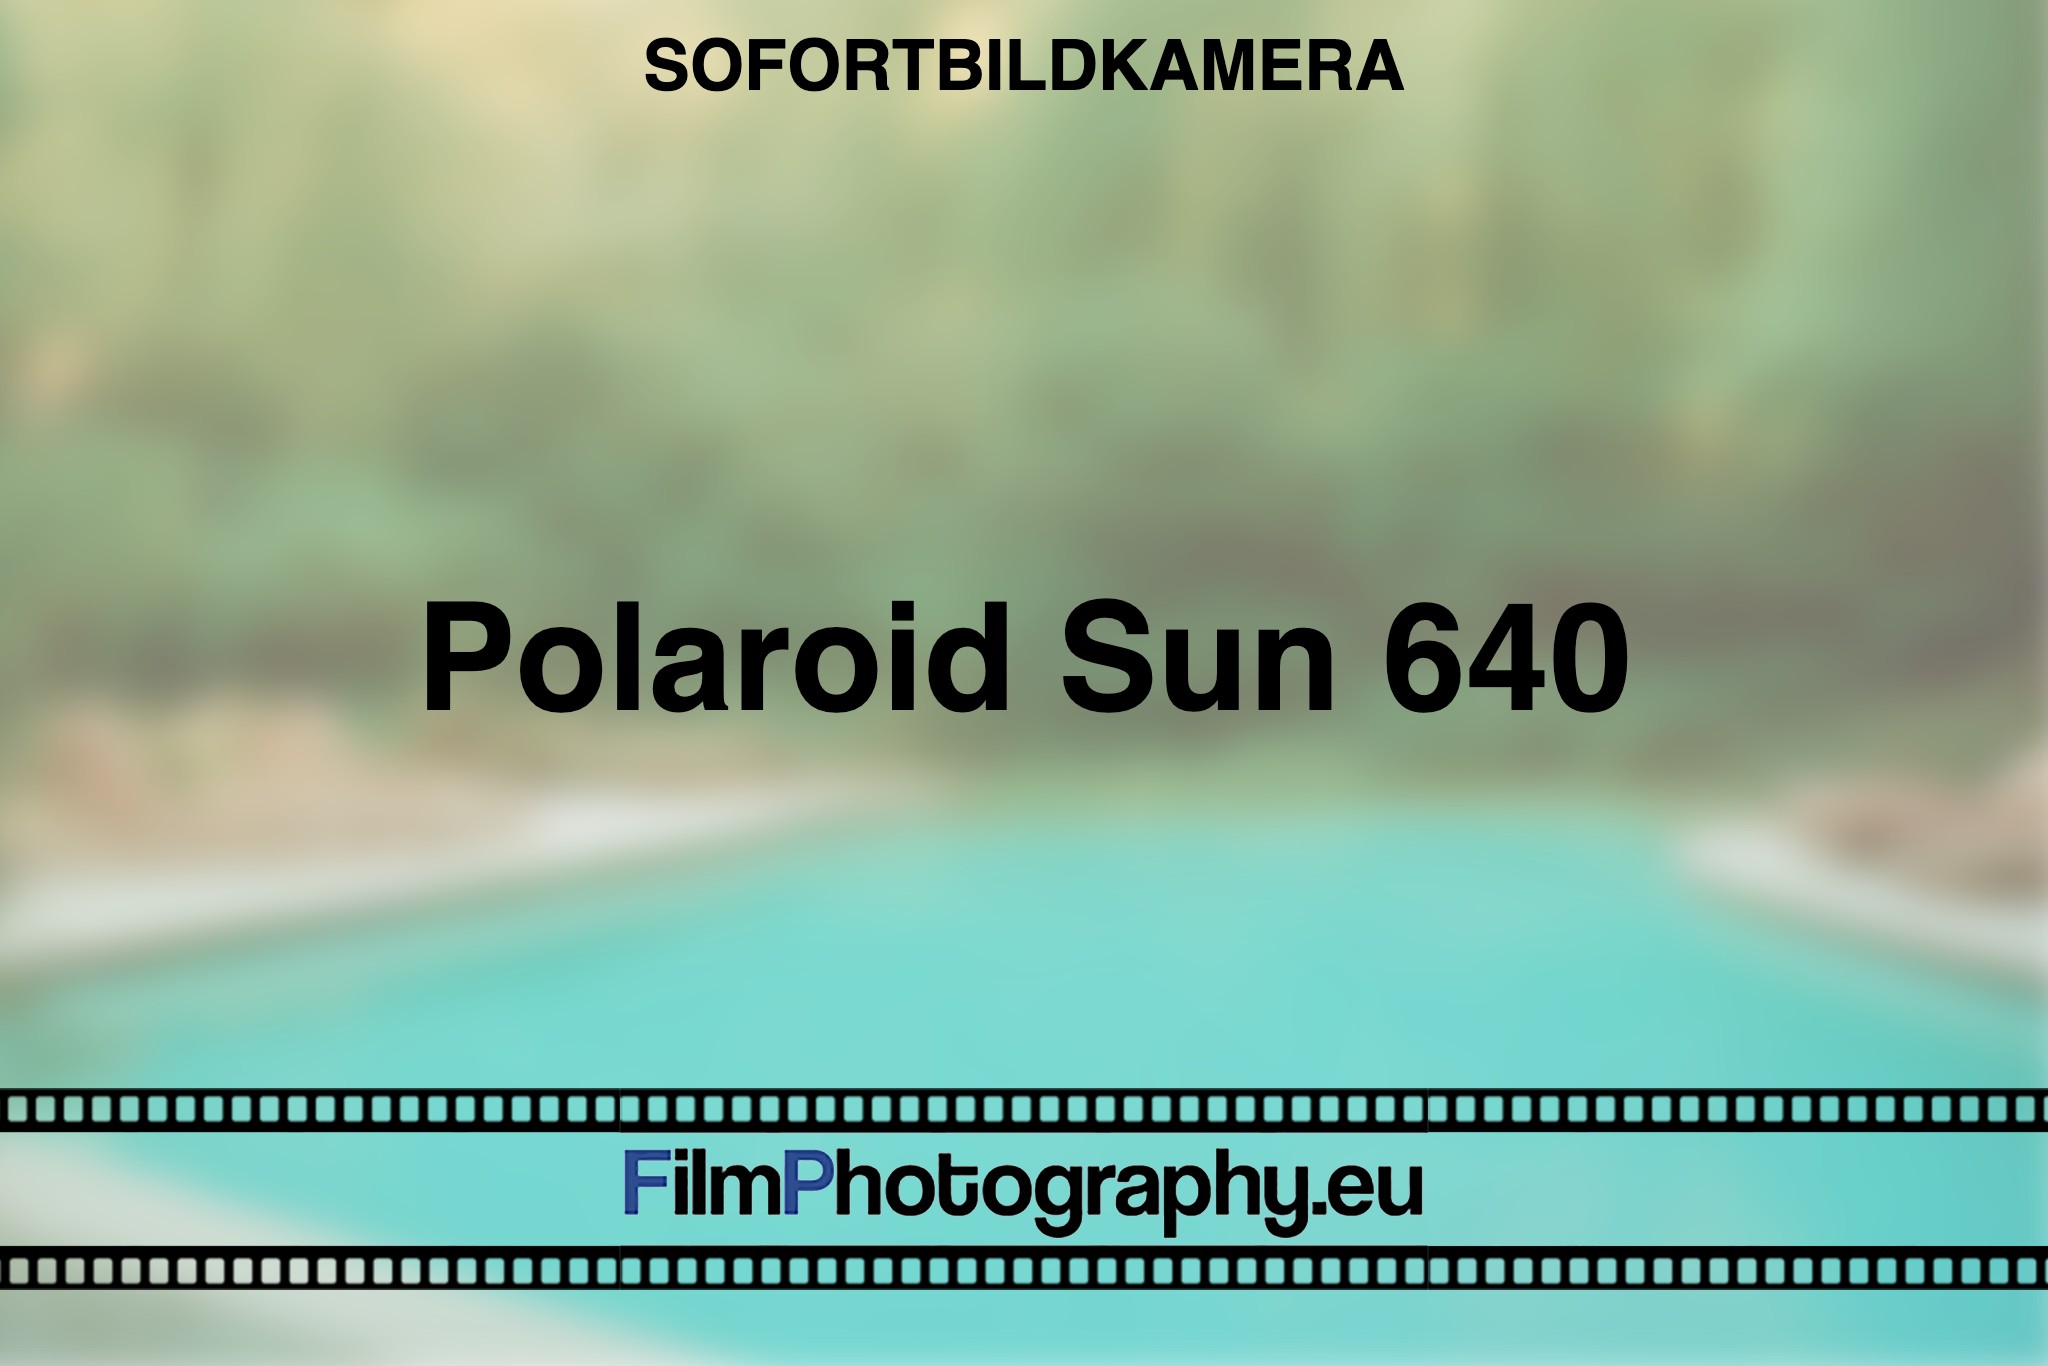 polaroid-sun-640-sofortbildkamera-bnv